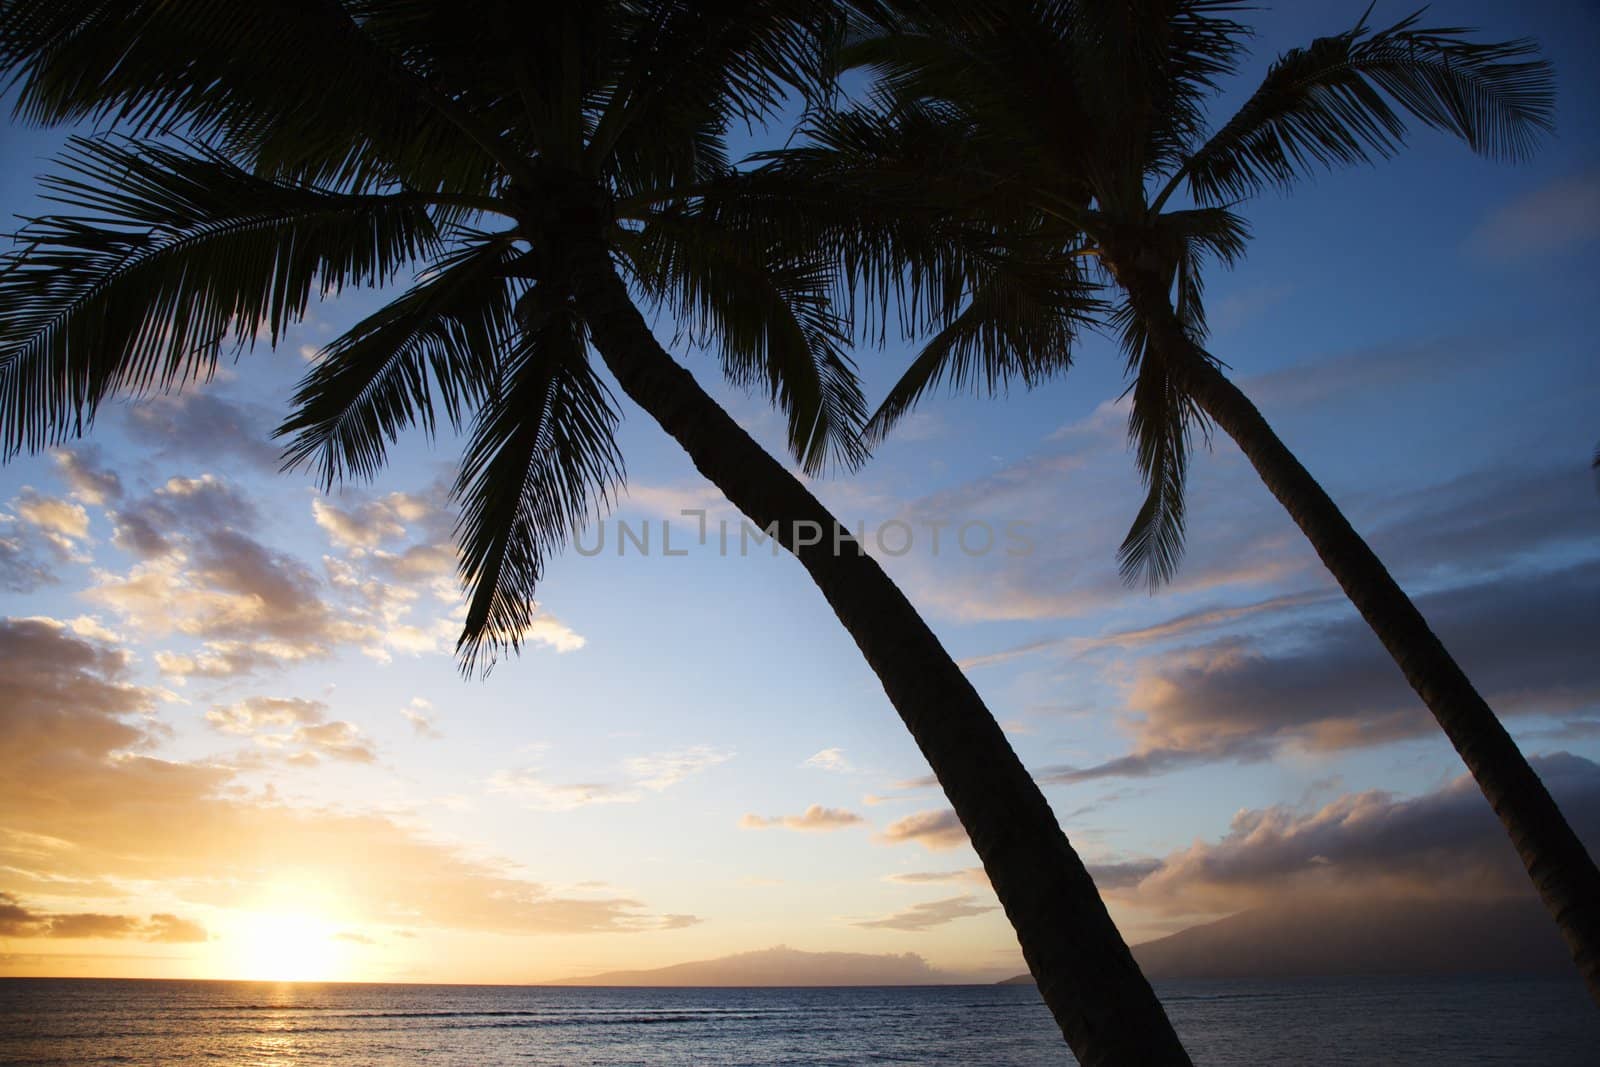 Maui sunset with palm trees. by iofoto